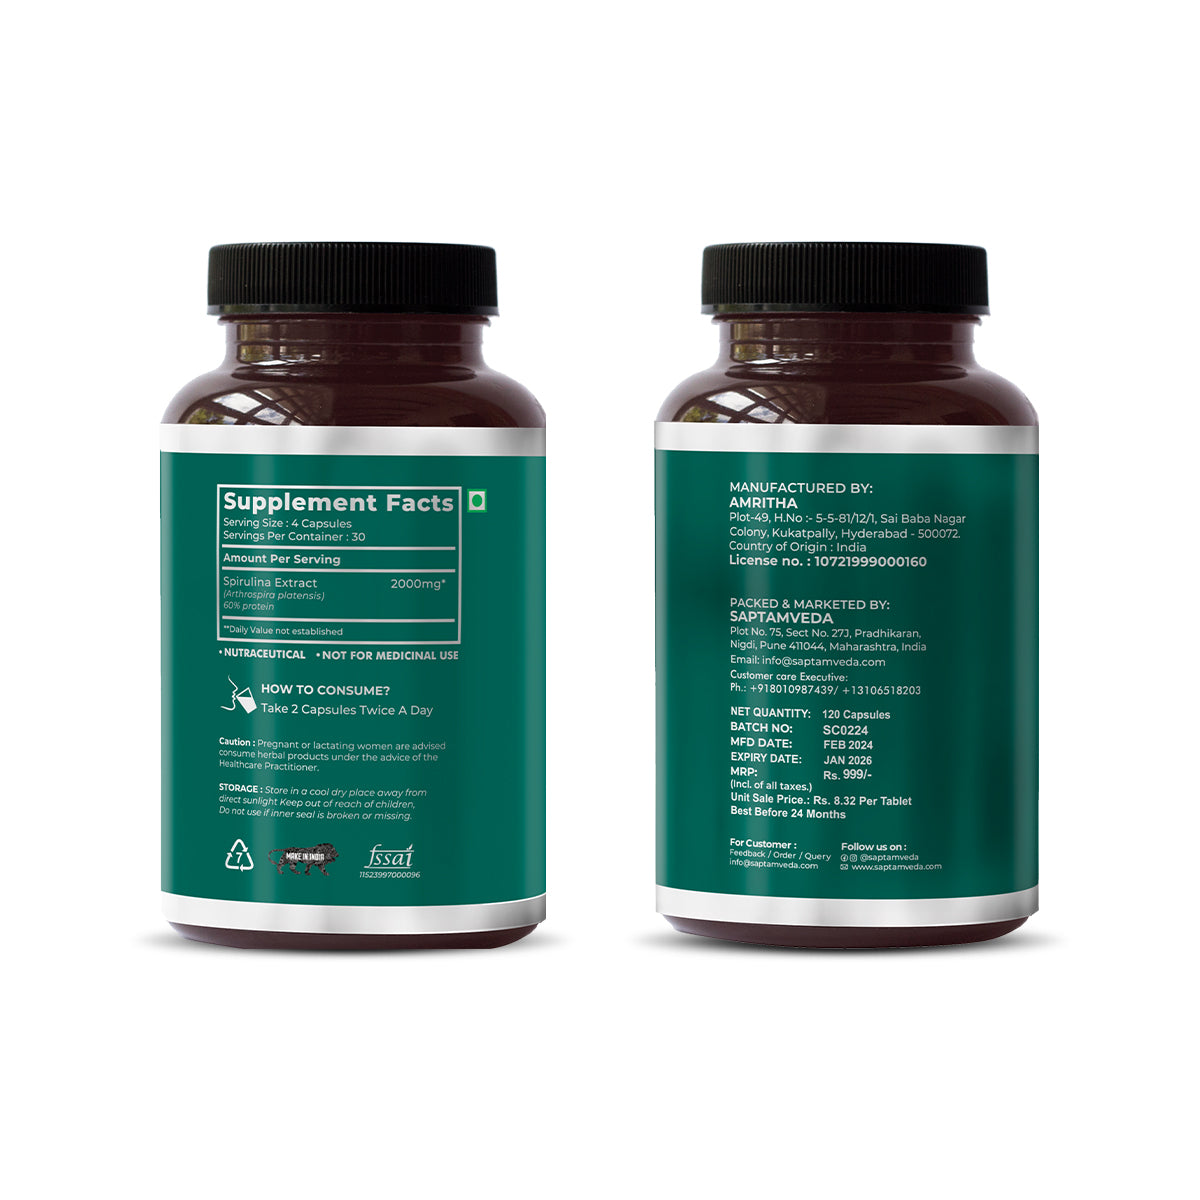 Saptamveda Spirulina Capsules | 2000 mg per serving